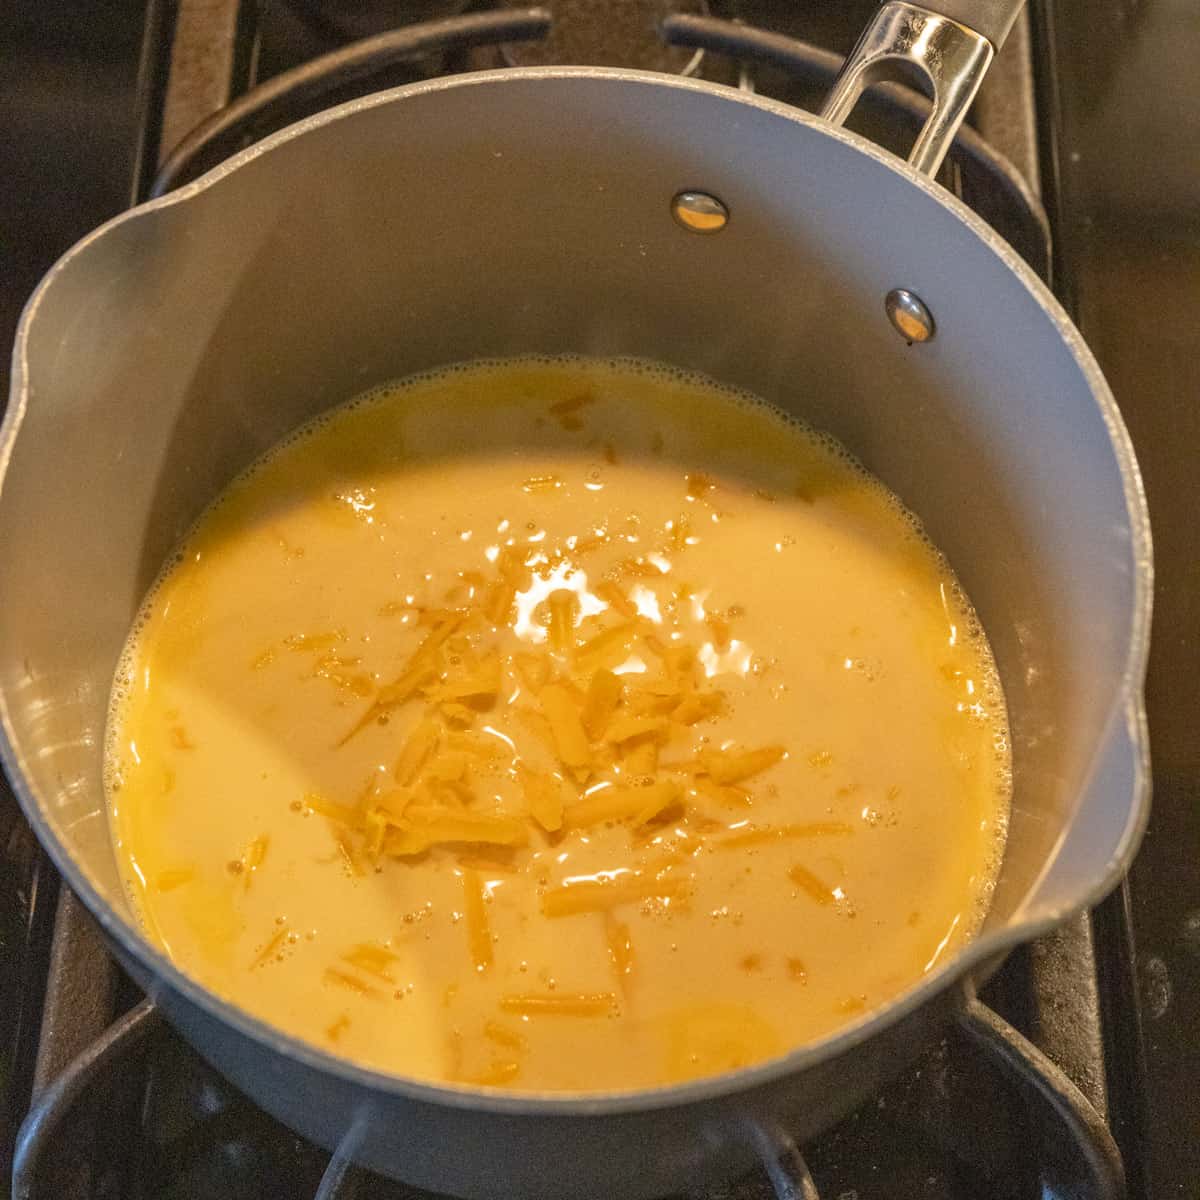 adding cheese the warm milk